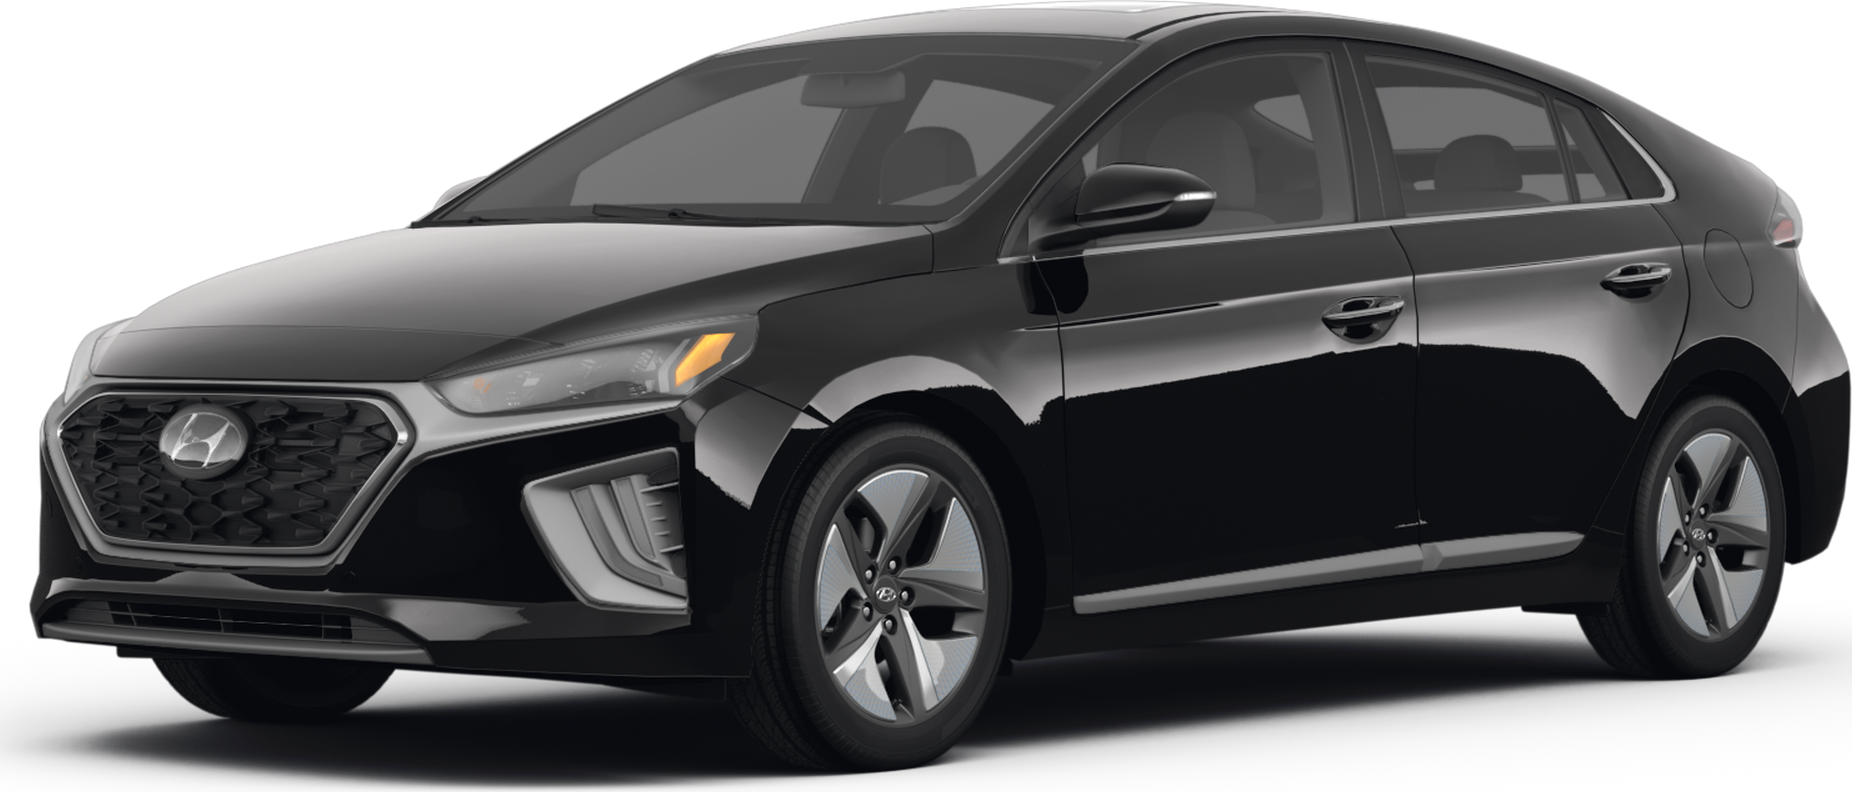 2020 Hyundai Ioniq Review - Autotrader